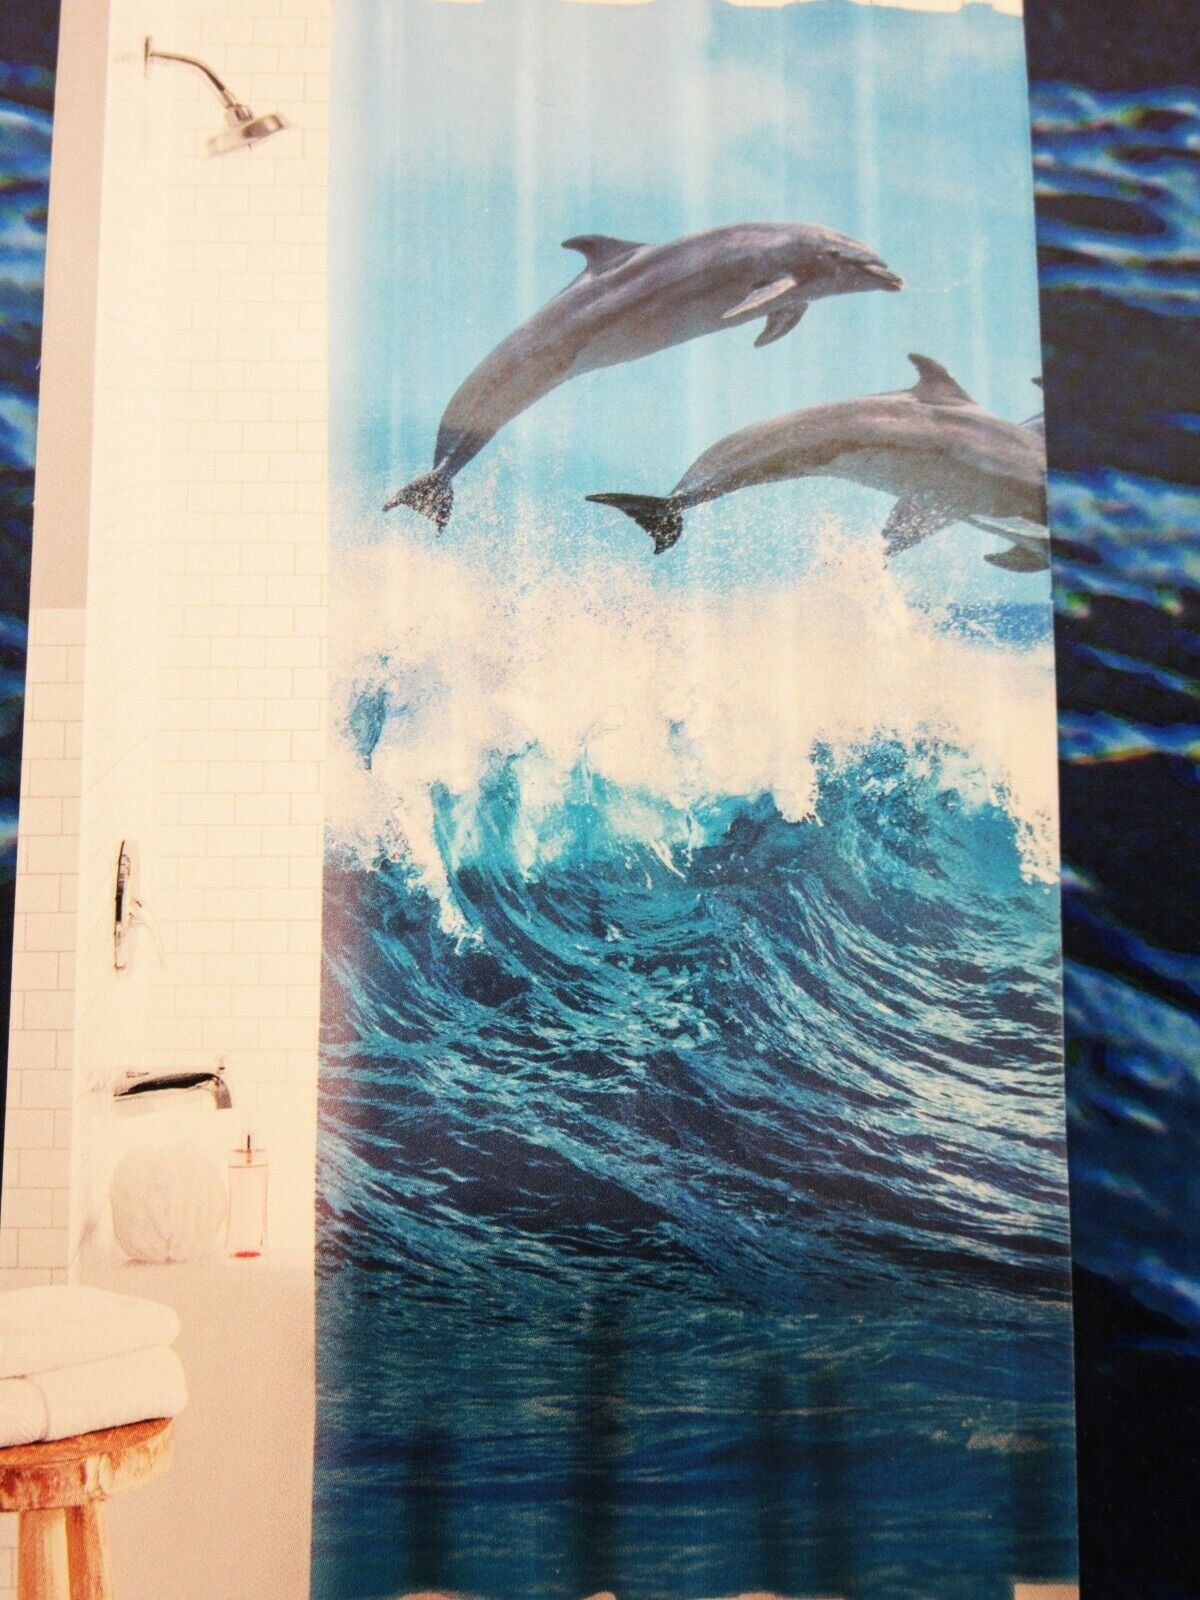 Dolphin Jumping Aquatic ~ Shower Curtain ~ 70" X 72" ~ Mainstays ~ 100% PEVA